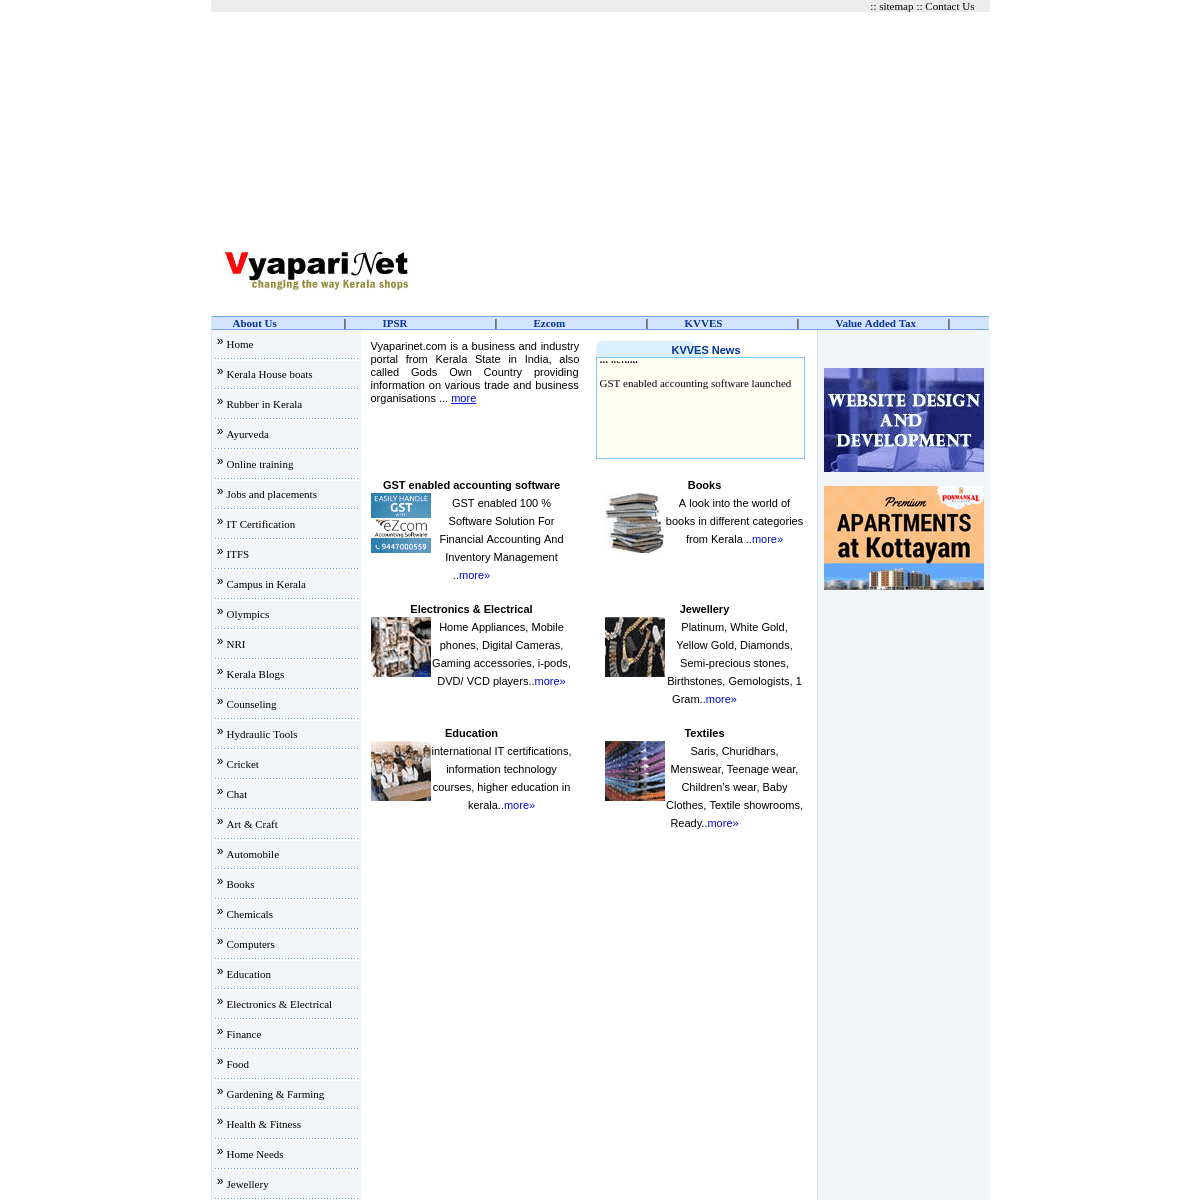 A complete backup of vyaparinet.com